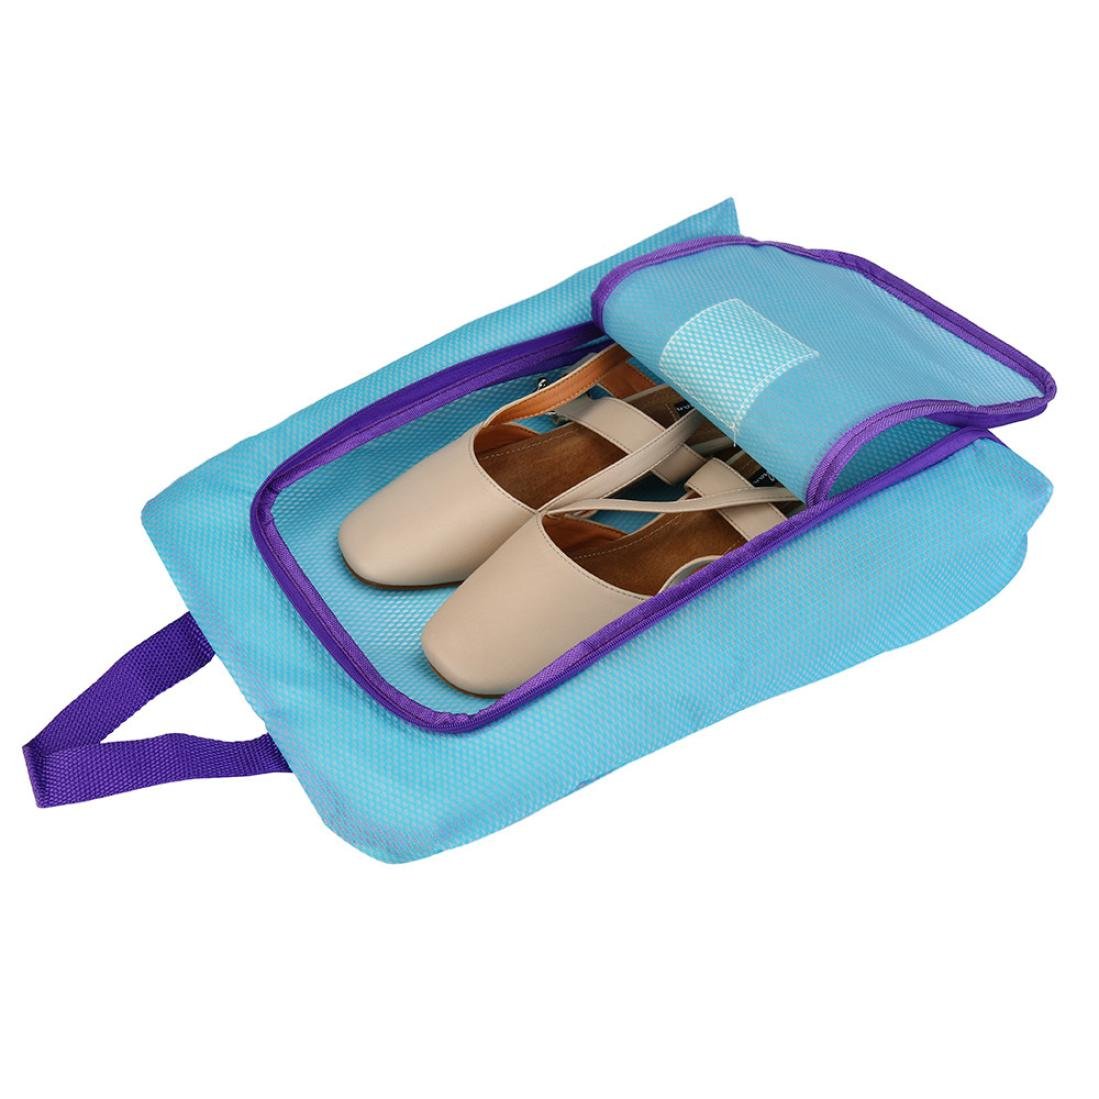 Shoe Bag,LtrottedJ Portable Travel shoe bag,Zip view window Pouch Storage waterproof Organizer (Blue)